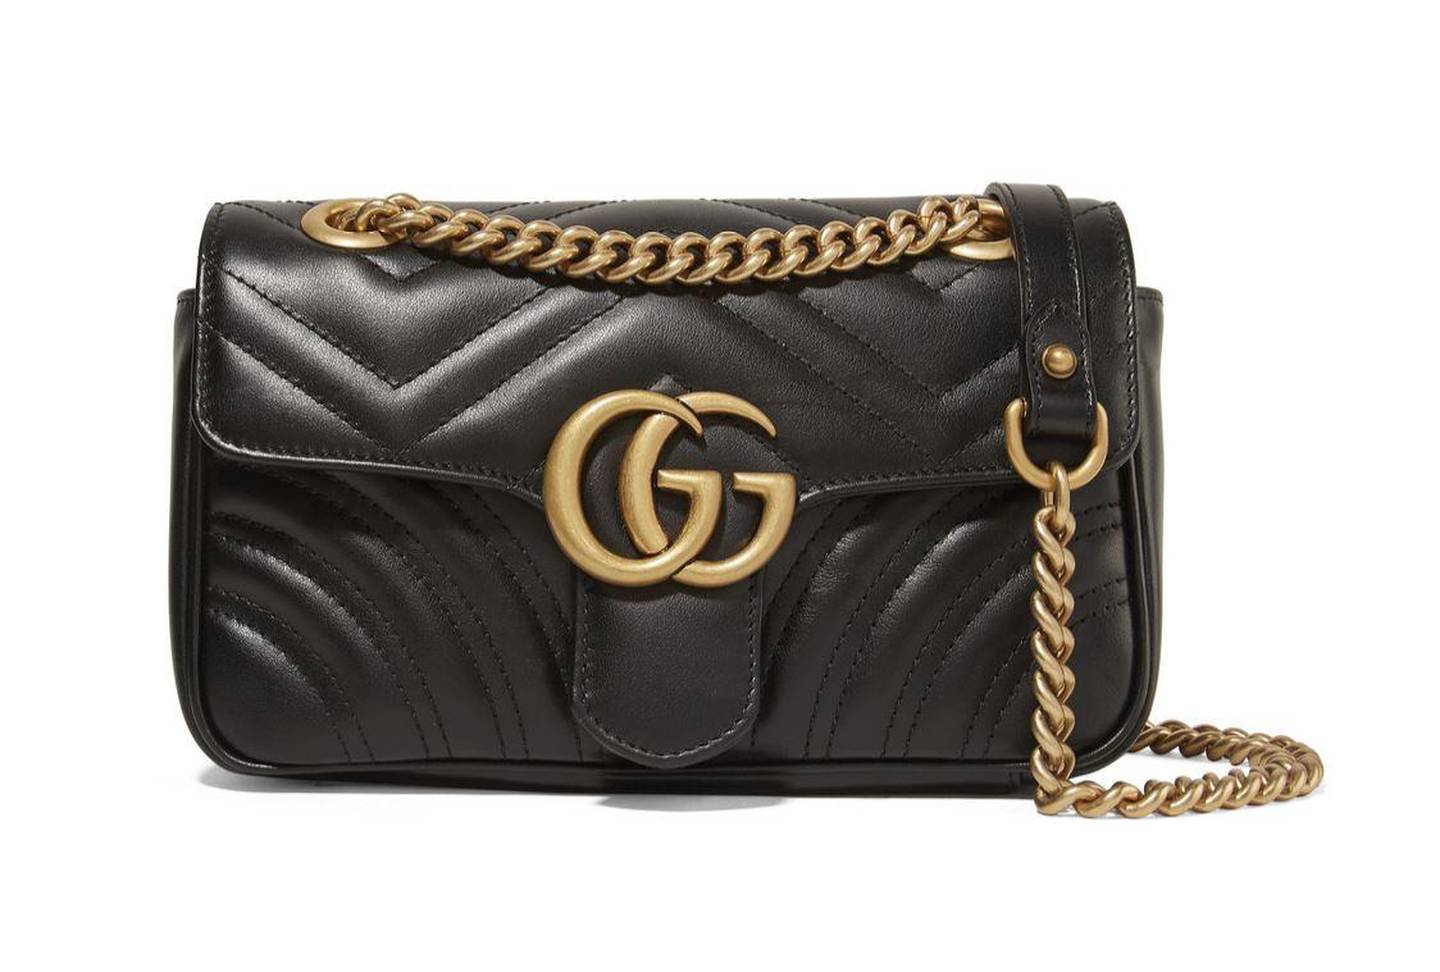 The GG Marmont bag was Net-a-Porter's best-selling designer bag in 2018. Courtesy Net-a-Porter